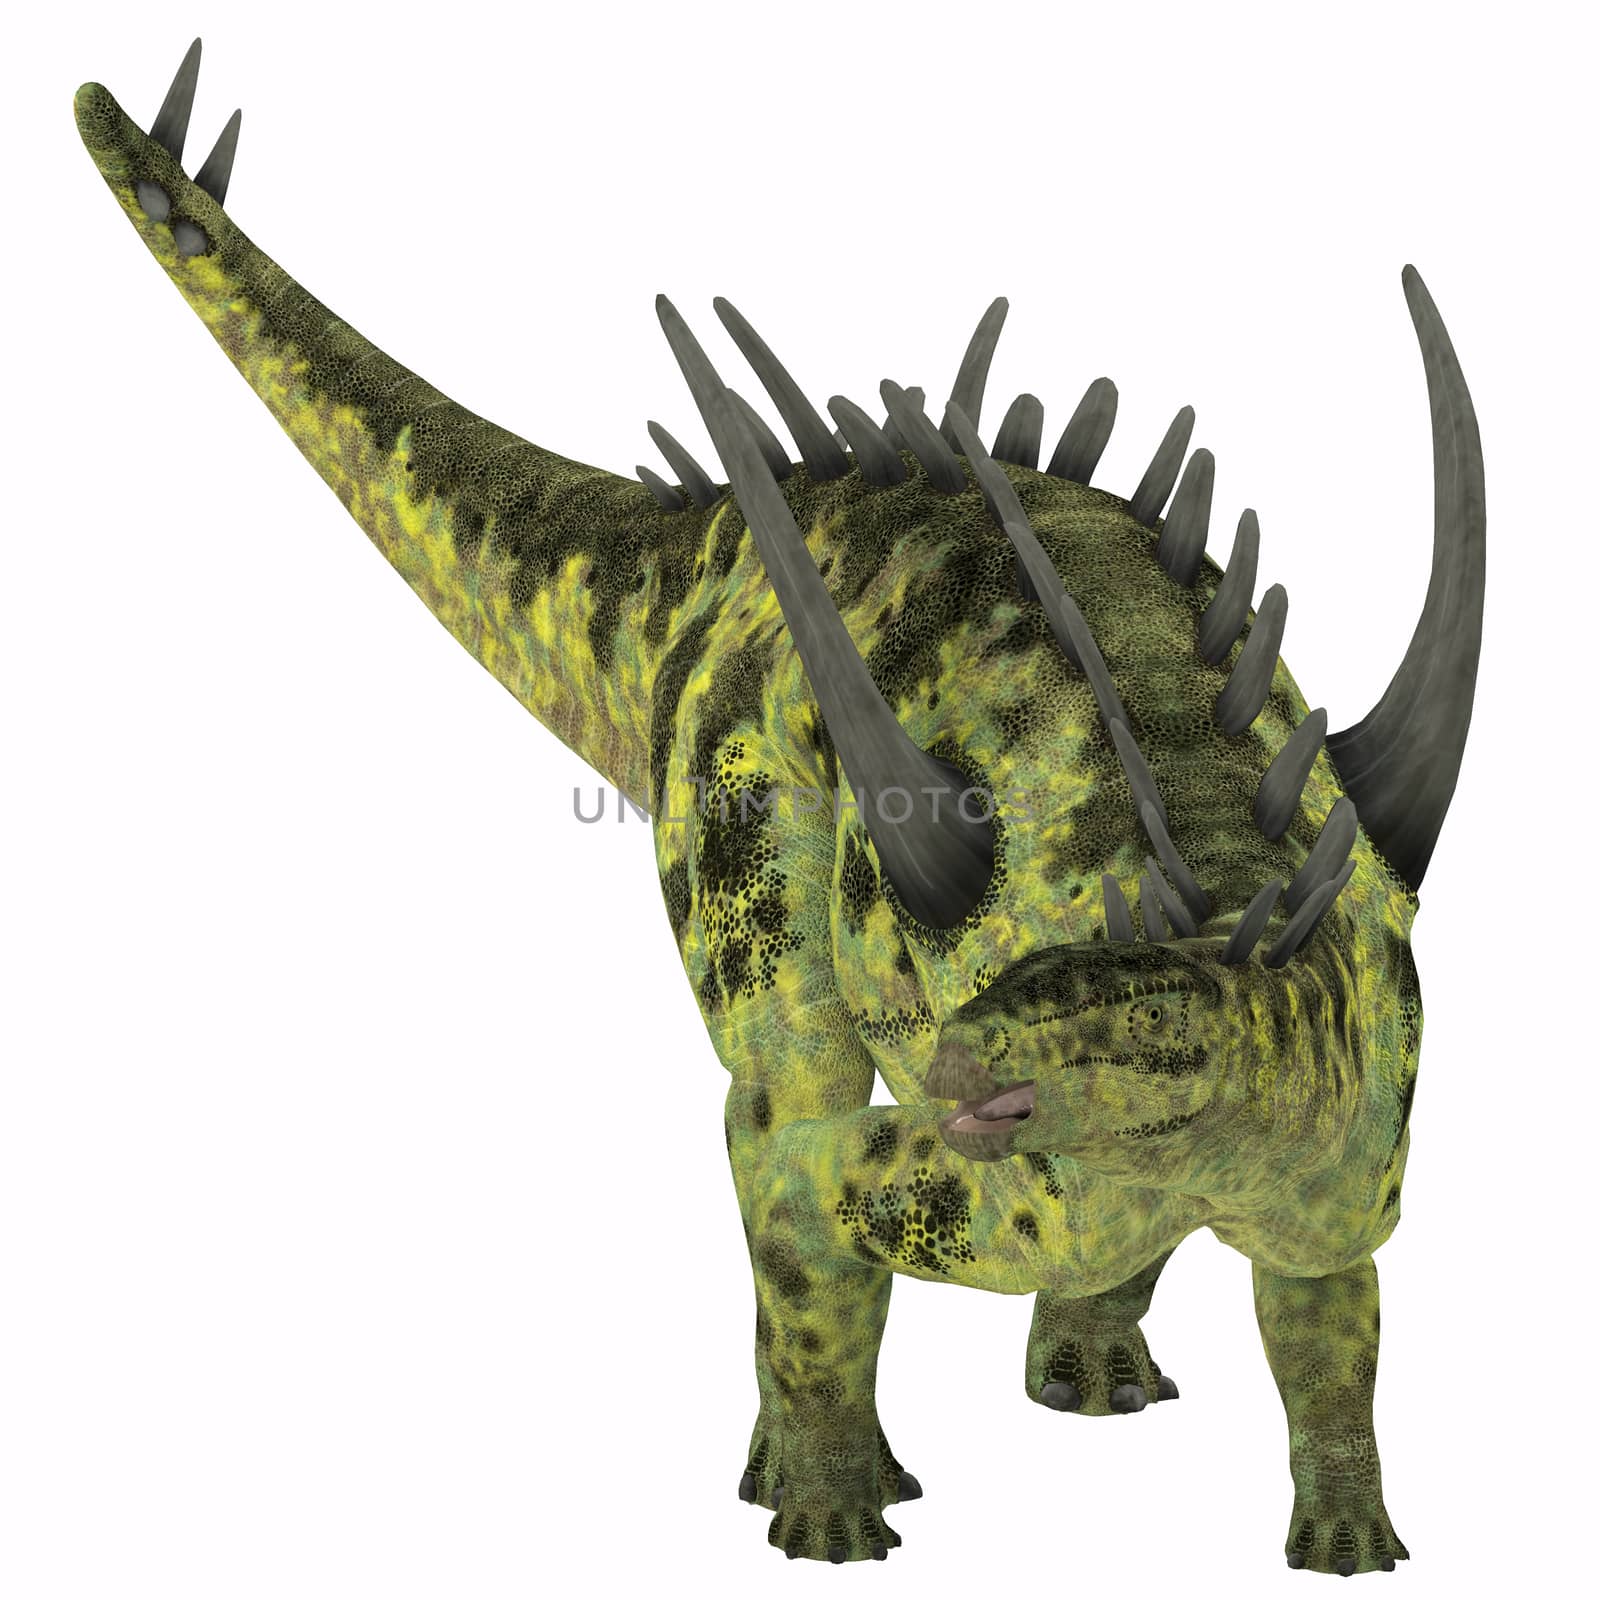 Gigantspinosaurus Giant-Spined Lizard by Catmando